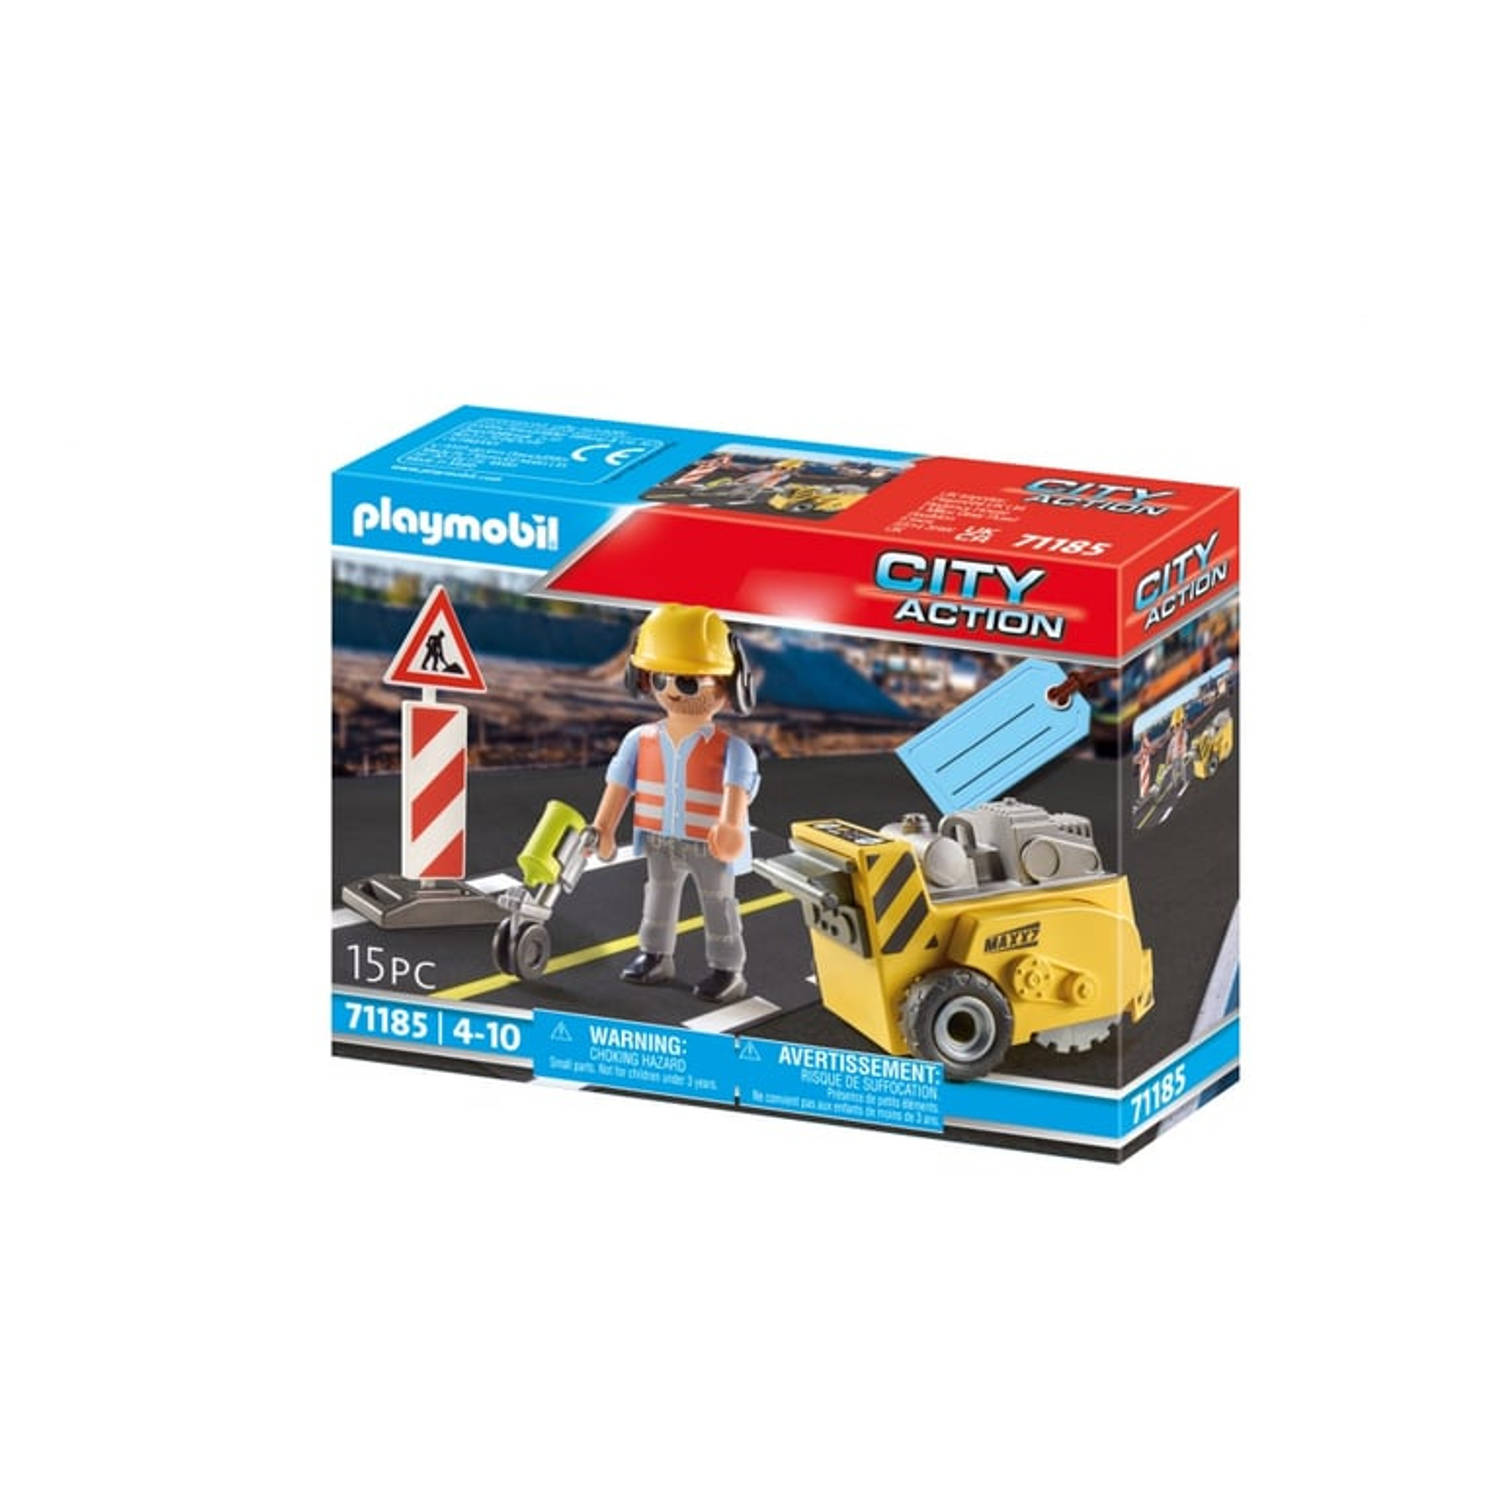 Playmobil® Constructie-speelset Bauarbeiter mit Kantenfräser (71185), City Action (15 stuks)